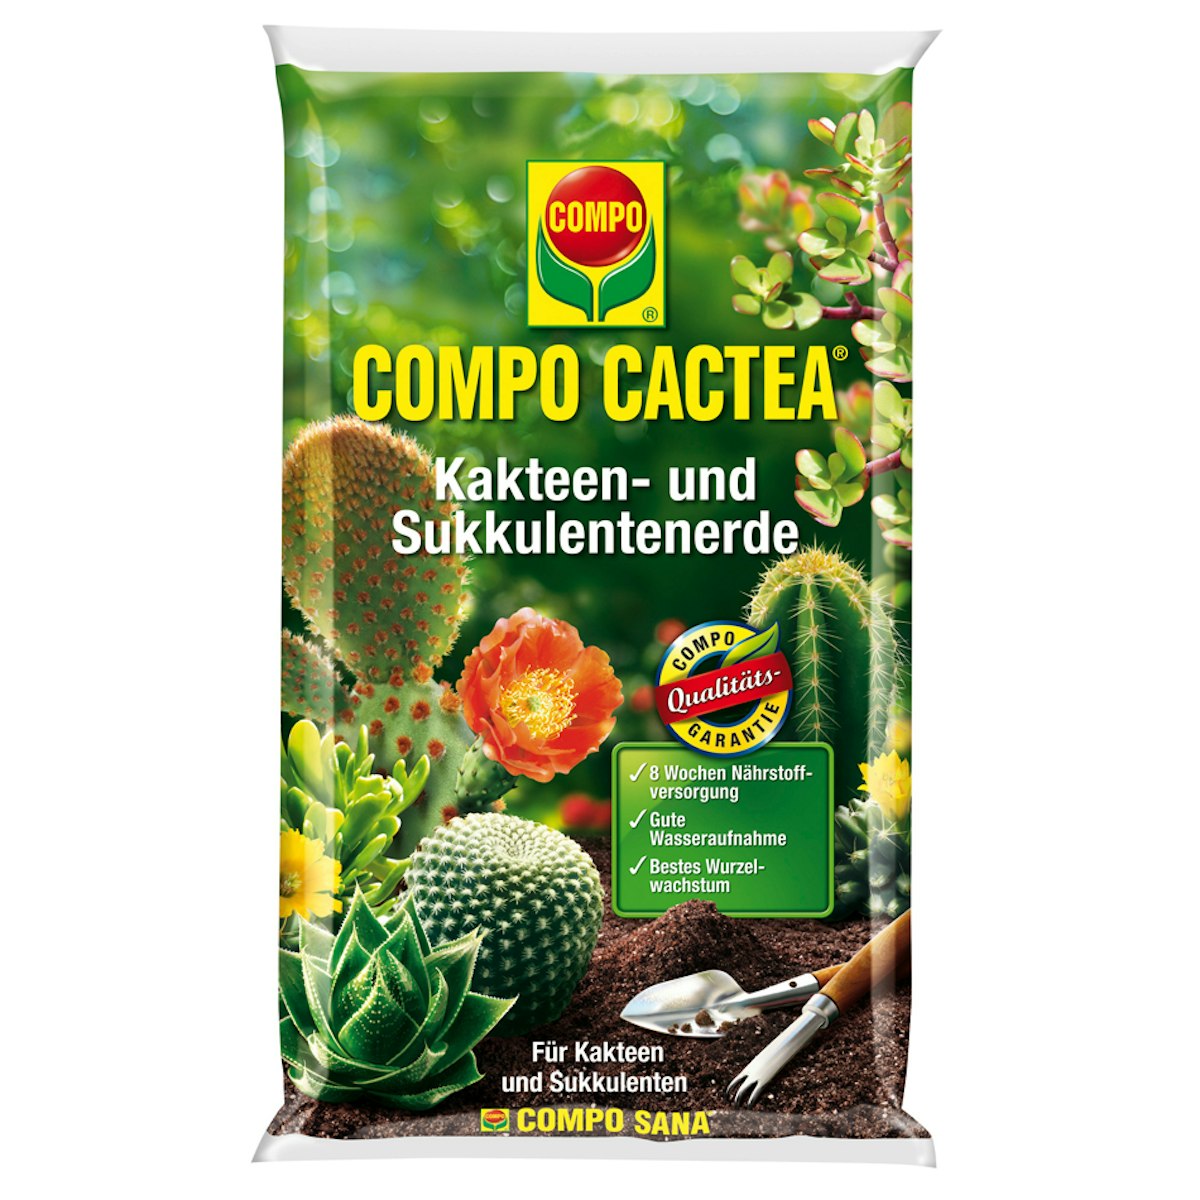 COMPO CACTEA® Kakteen- und Sukkulentenerde 5 L von COMPO